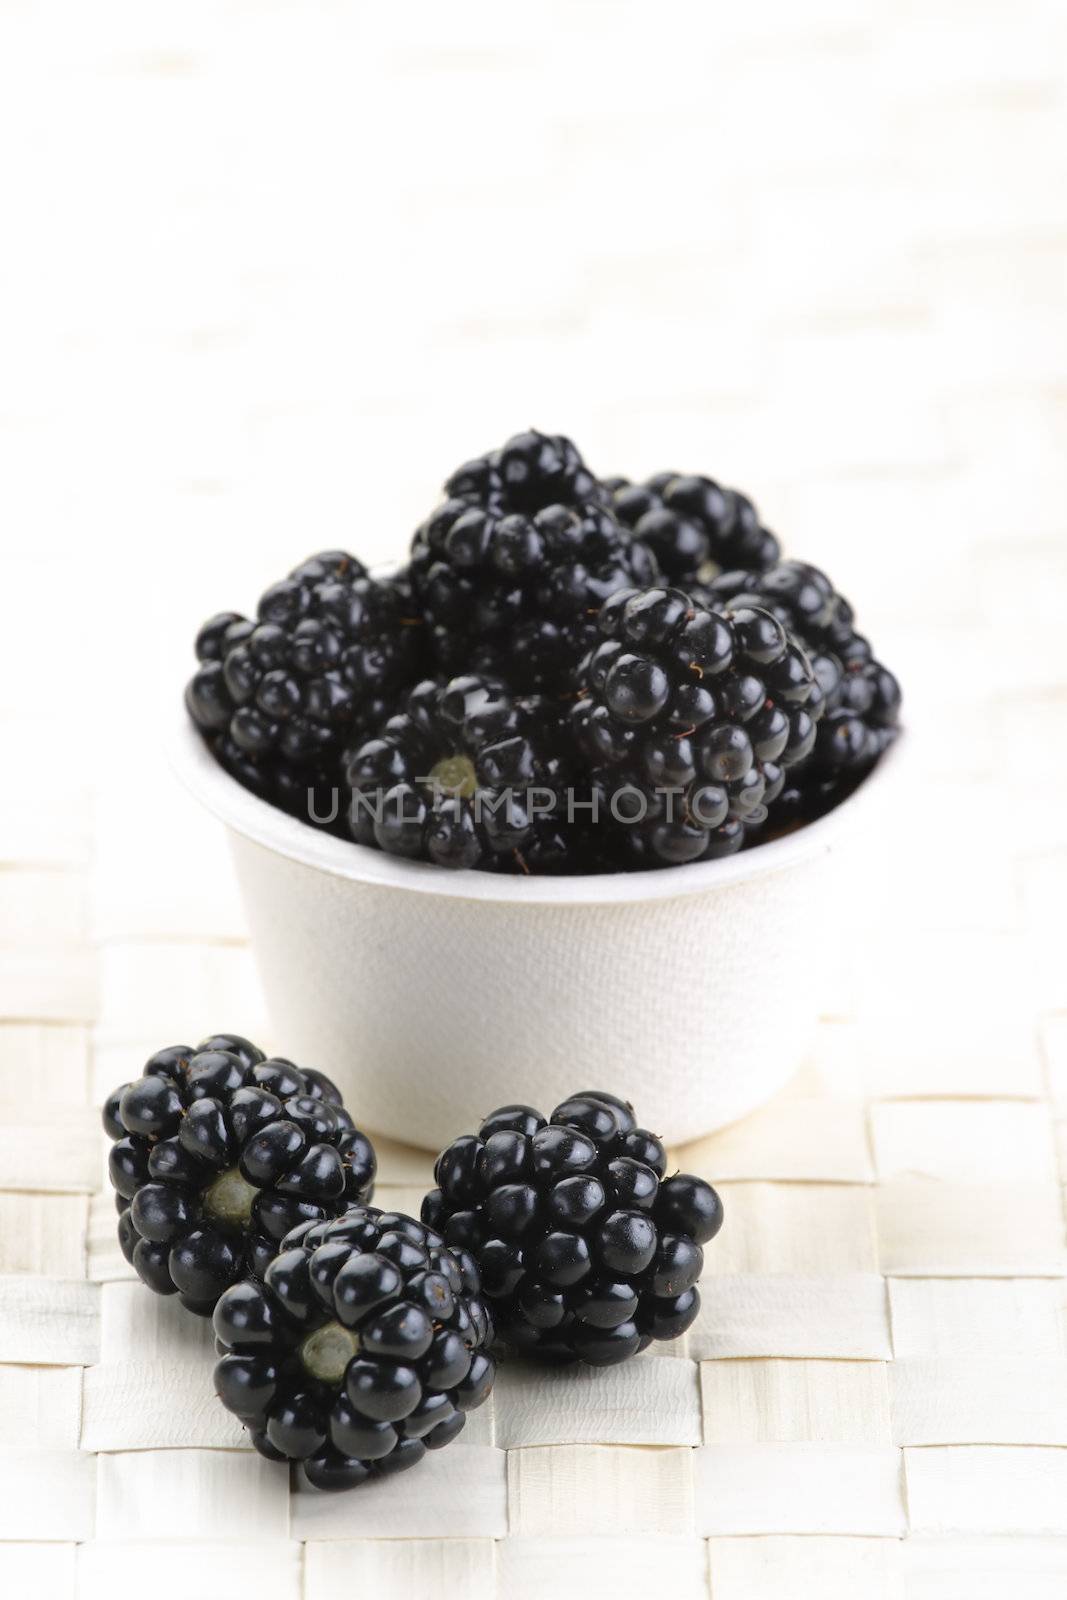 Fresh blackberries by carterphoto